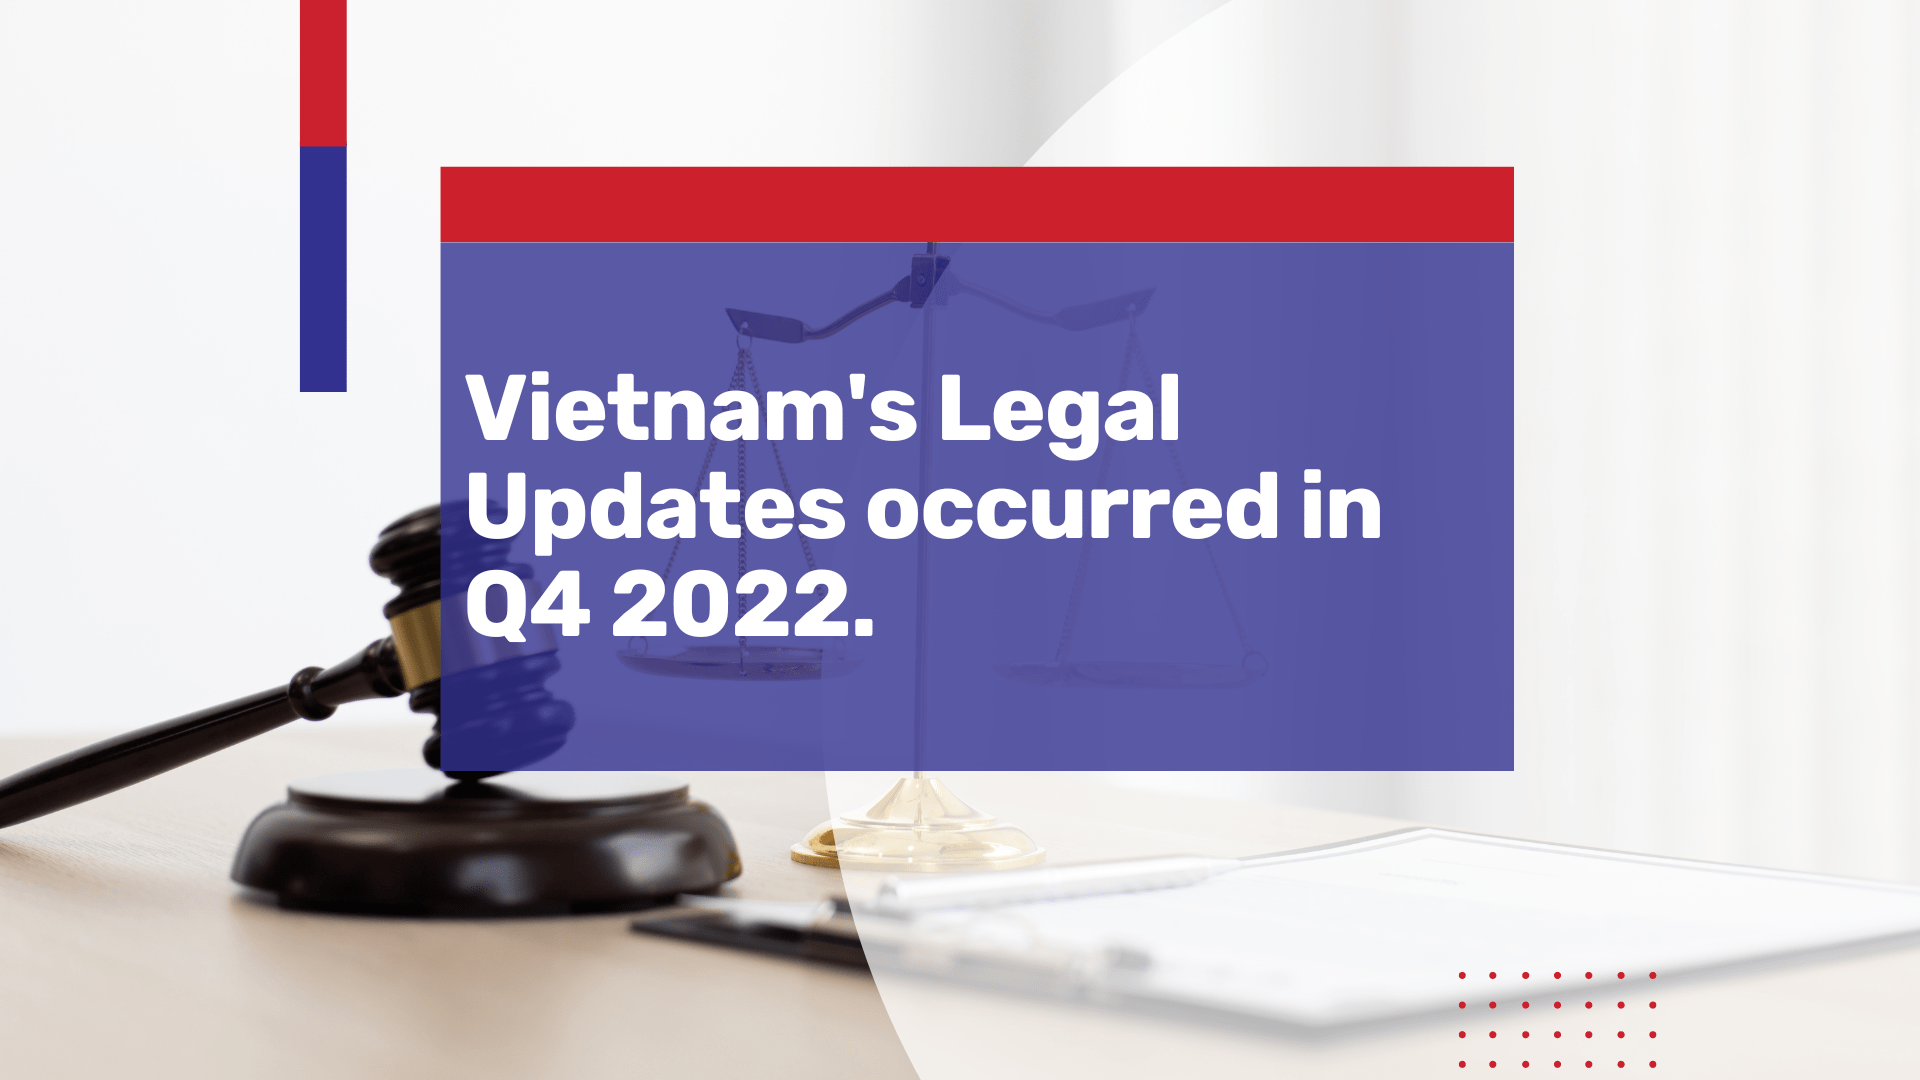 Vietnam’s Latest Legal News and Updates: Q4 2022 Roundup